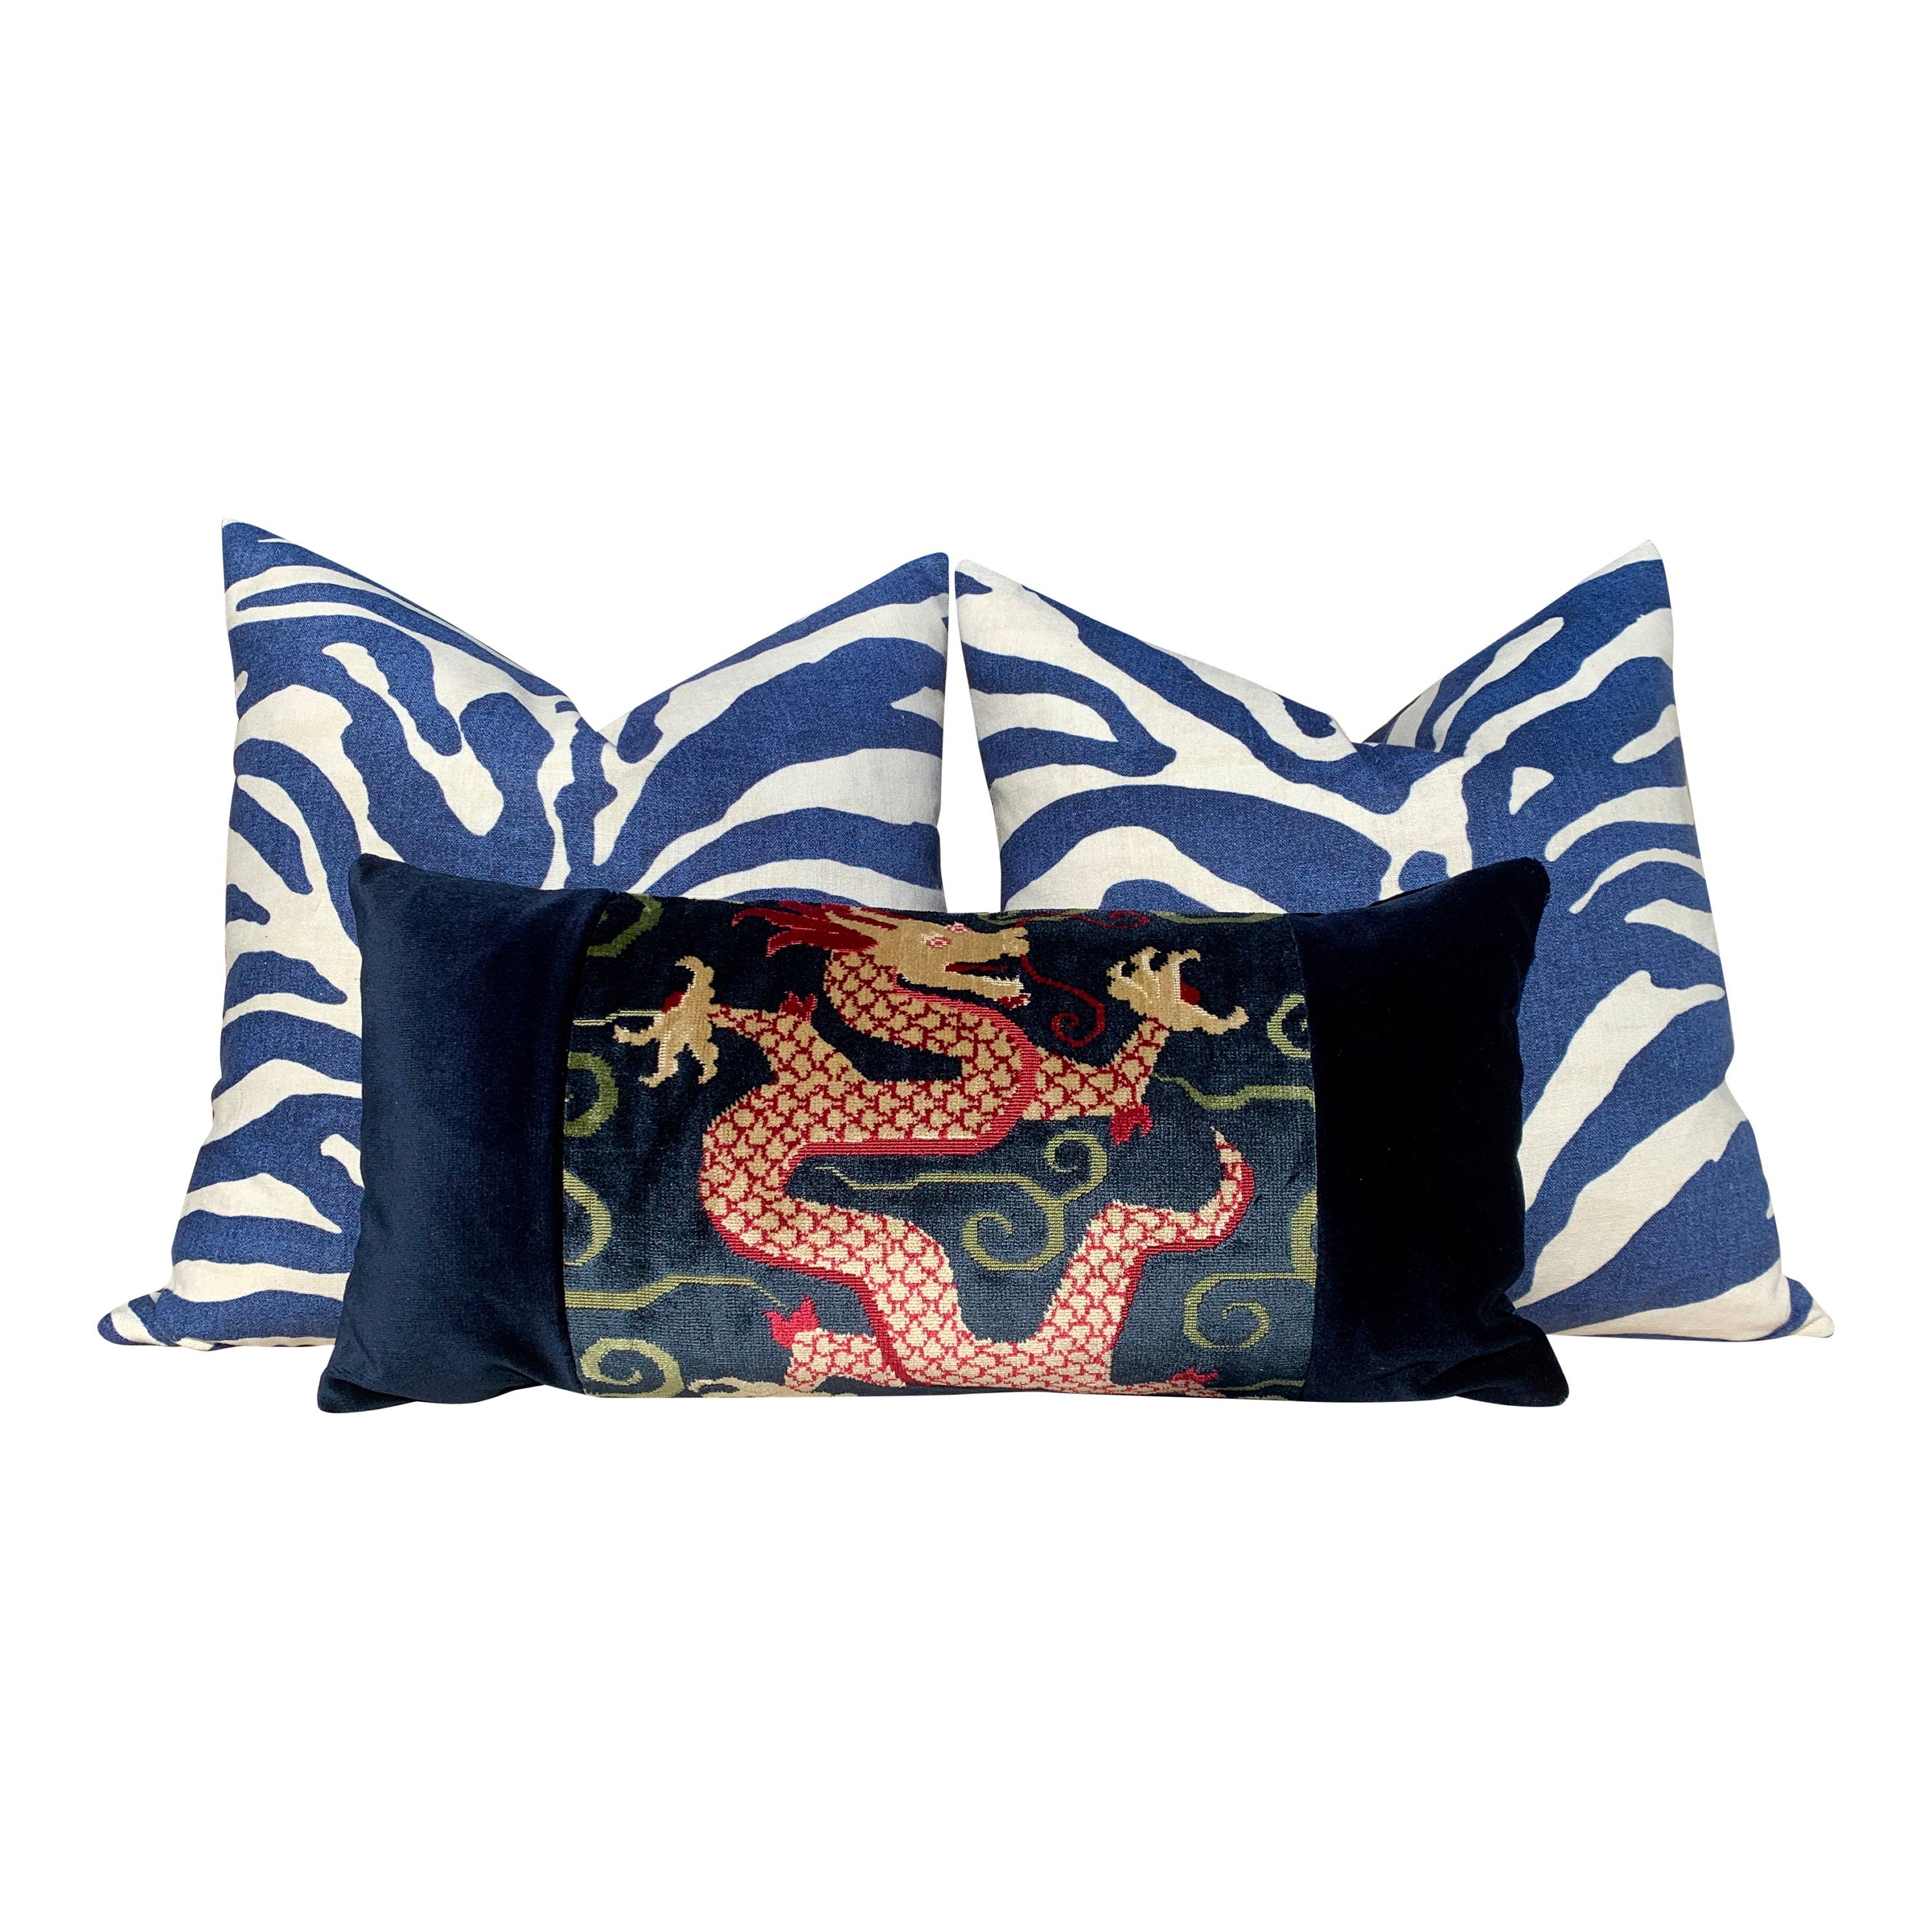 Thibaut Serengeti Decorative Pillow in Navy. Zebra Lumbar Cushion Cover in Blue. Accent Pillow. Decorative Cushion Cover, Lumbar pillow